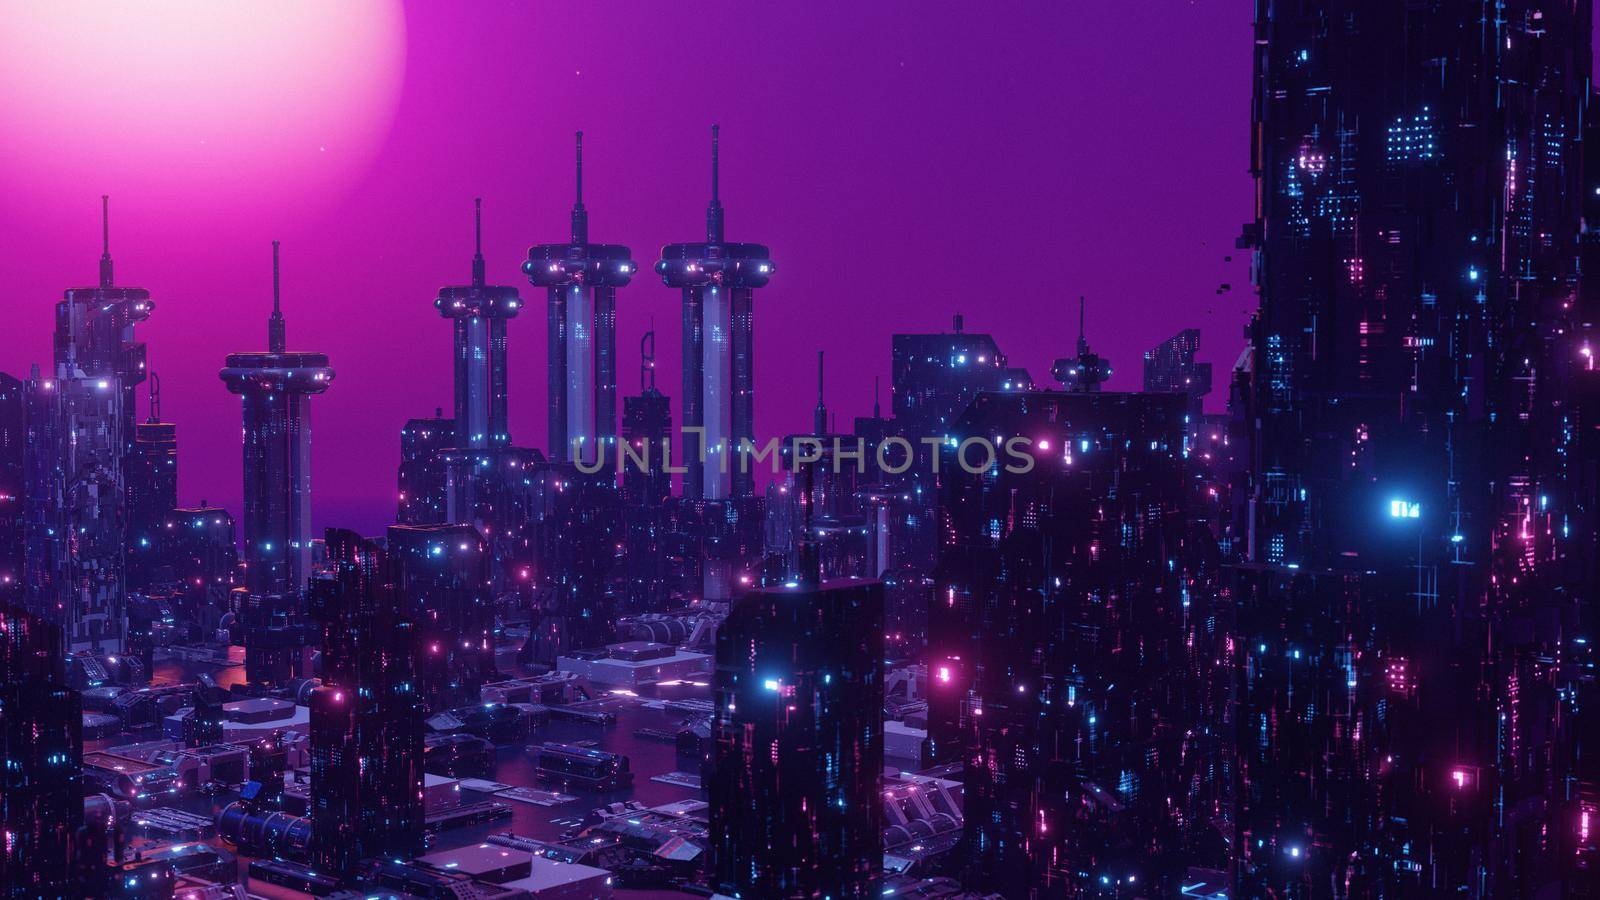 Cyberpunk Cityscape with Neon lights. Night scene 3D Render by yay_lmrb